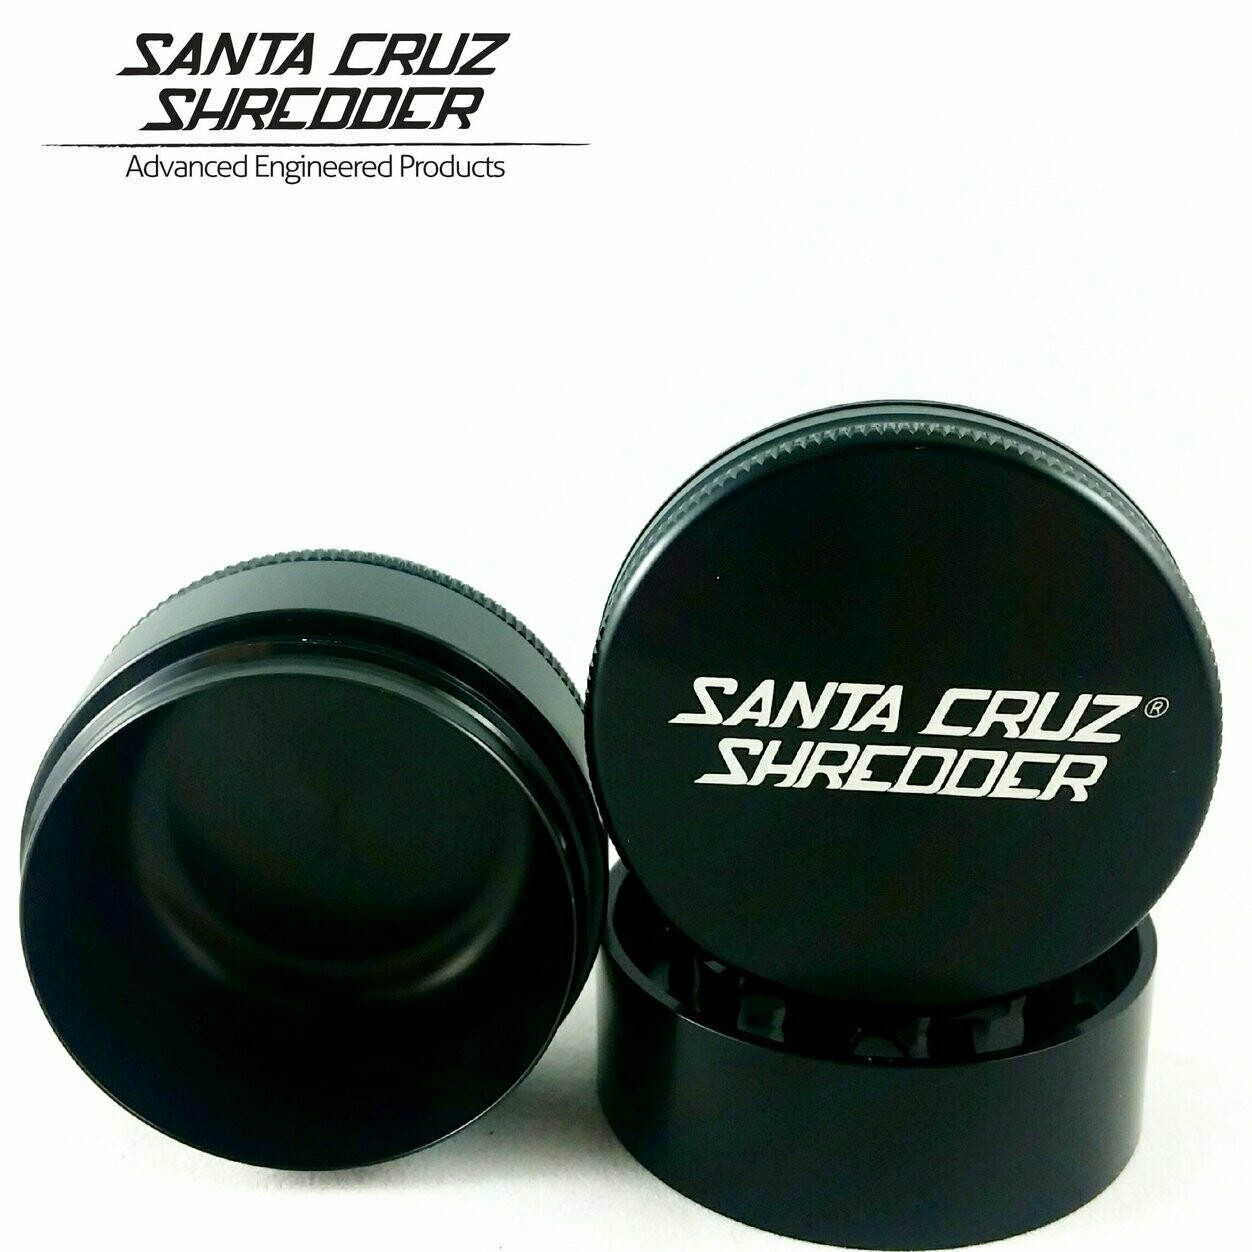 Santa Cruz Shredder 3pc Grinders 